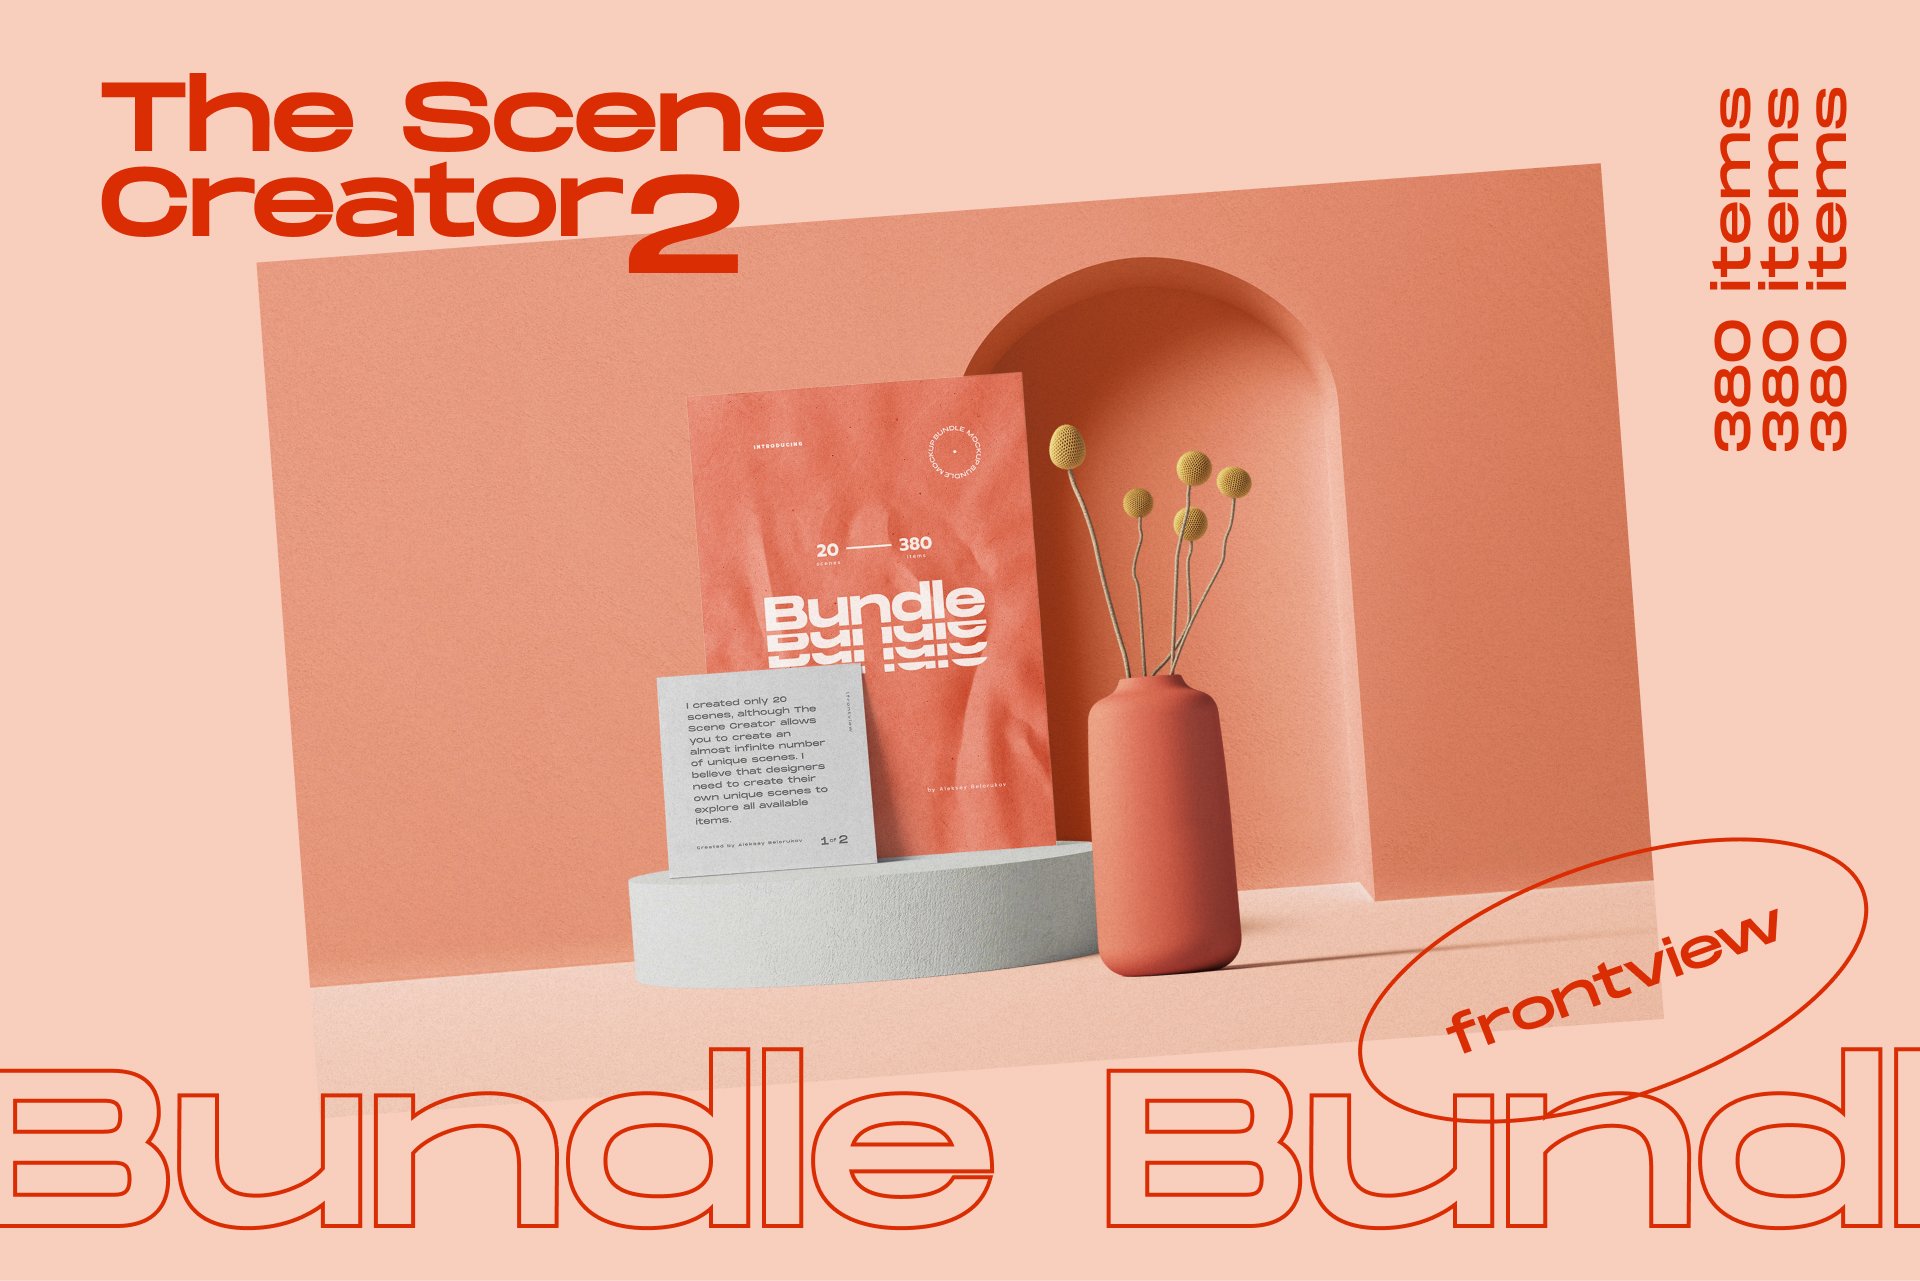 The Scene Creator 2 - Bundle 3 in 1 preview image.